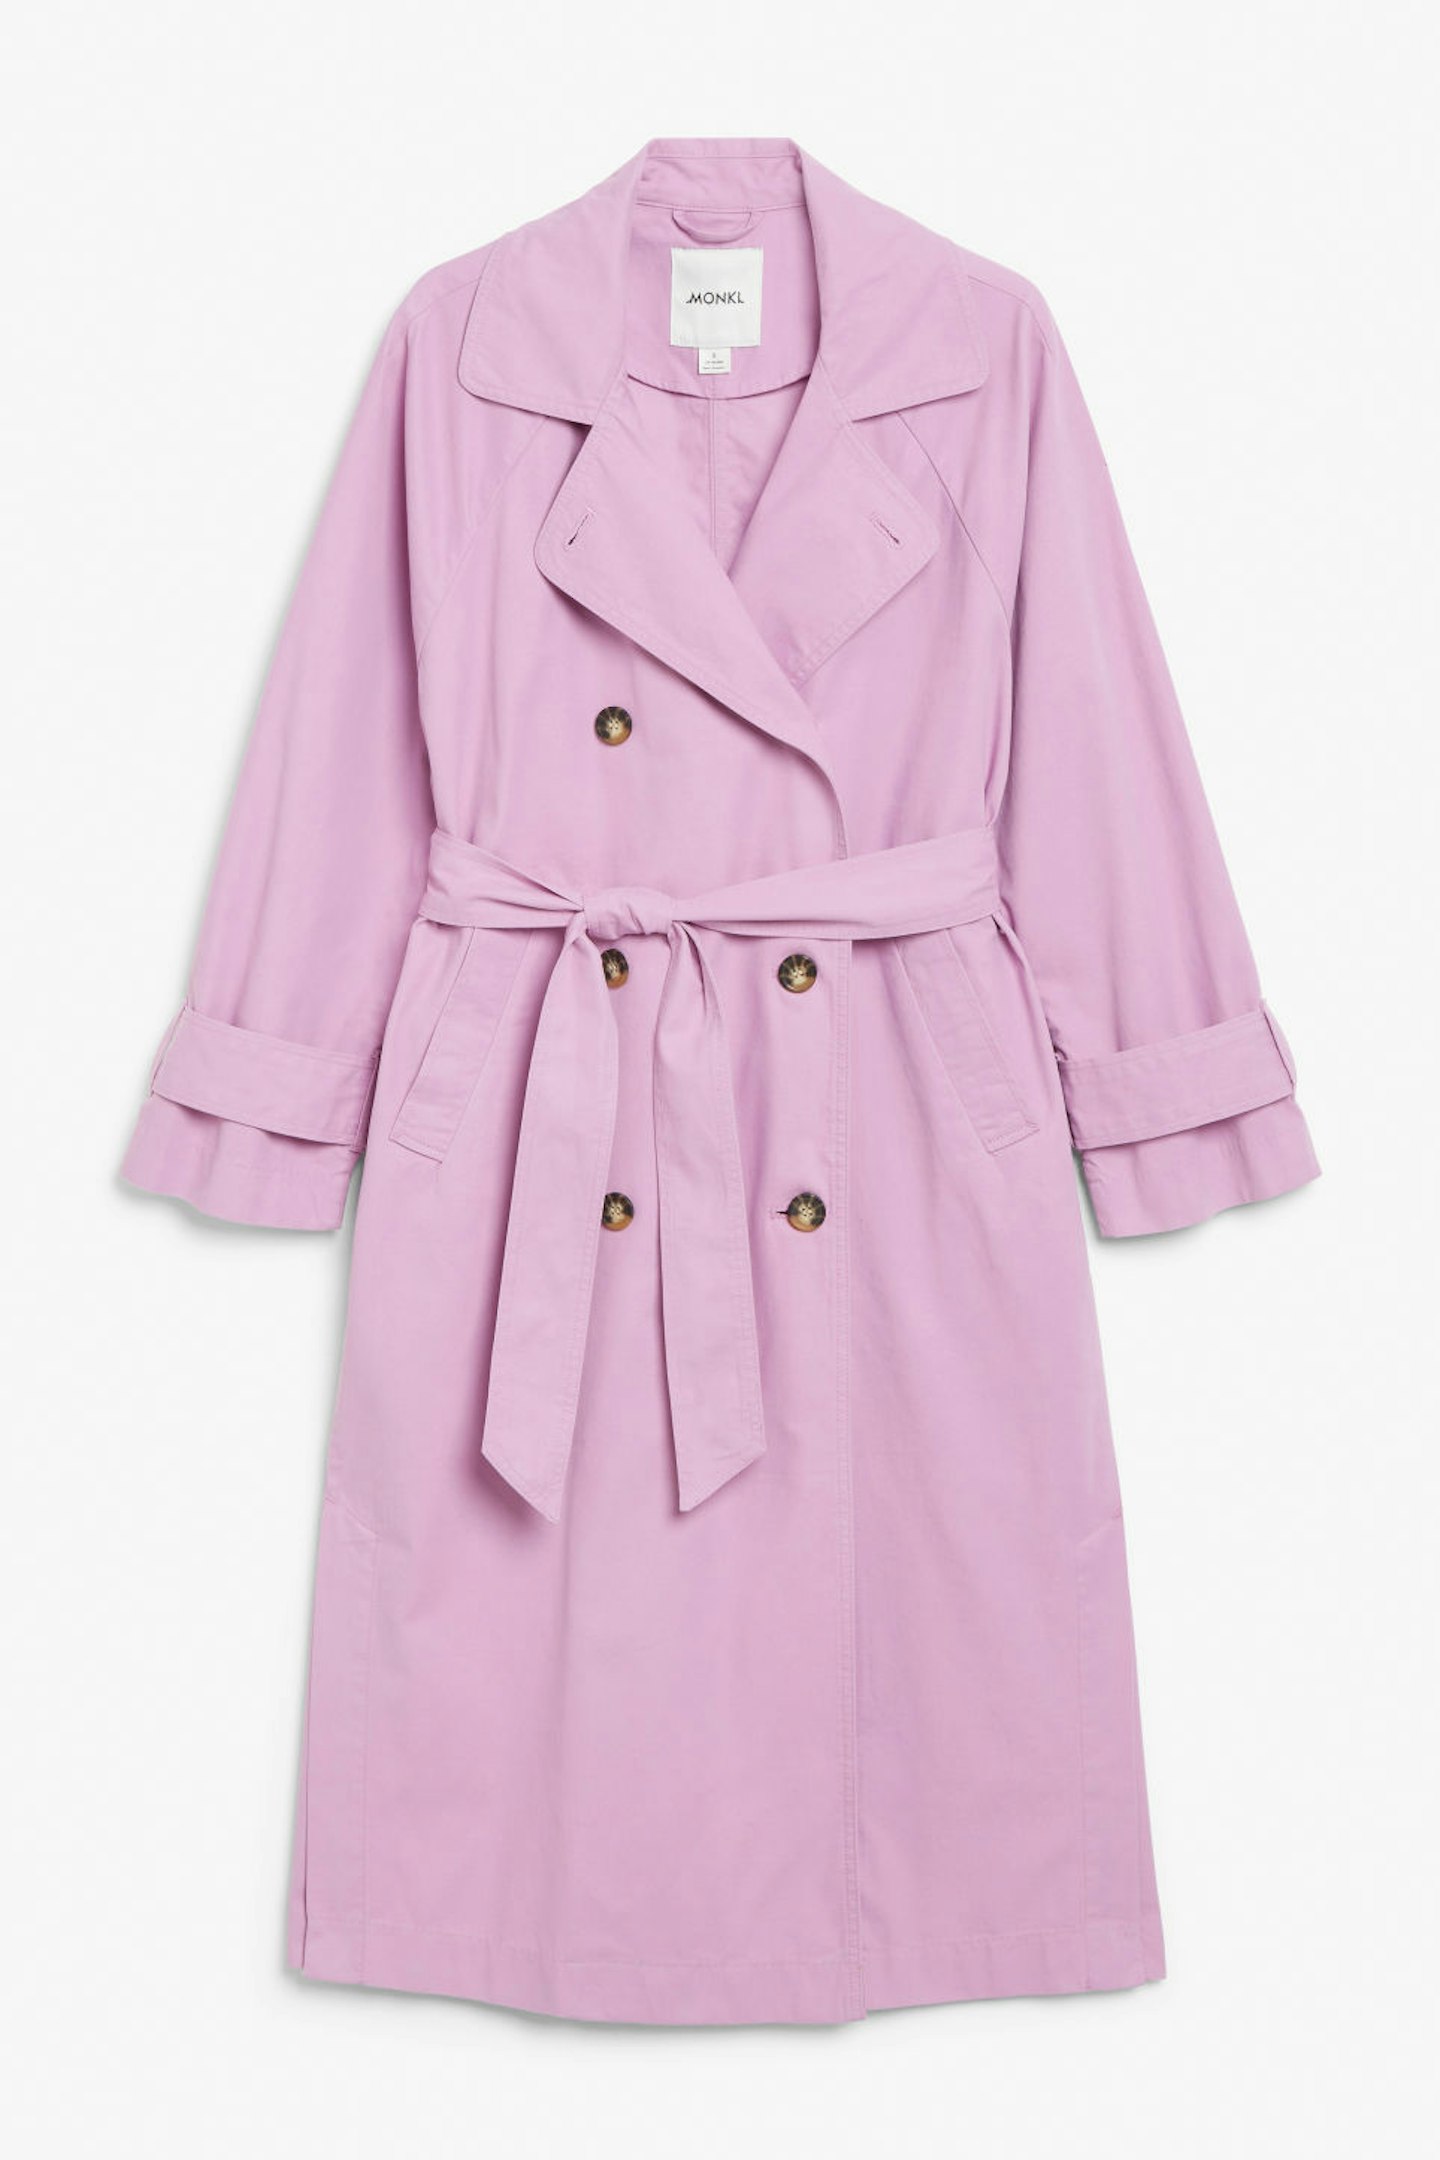 Monki, Pink Trench Coat, £75